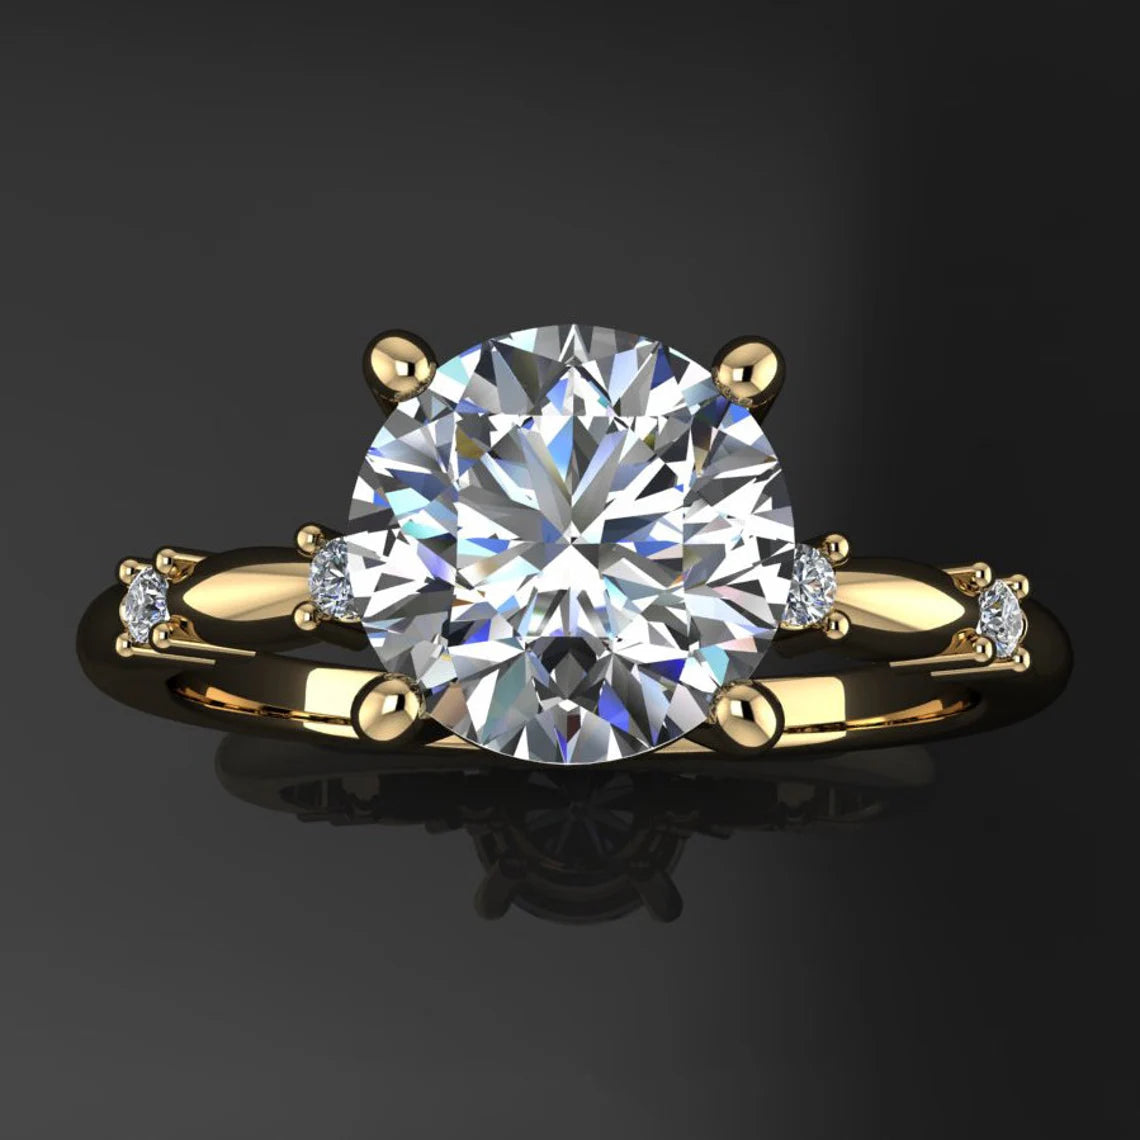 jasmine ring - 1.5 carat diamond cut round moissanite engagement ring, NEO moissanite - J Hollywood Designs